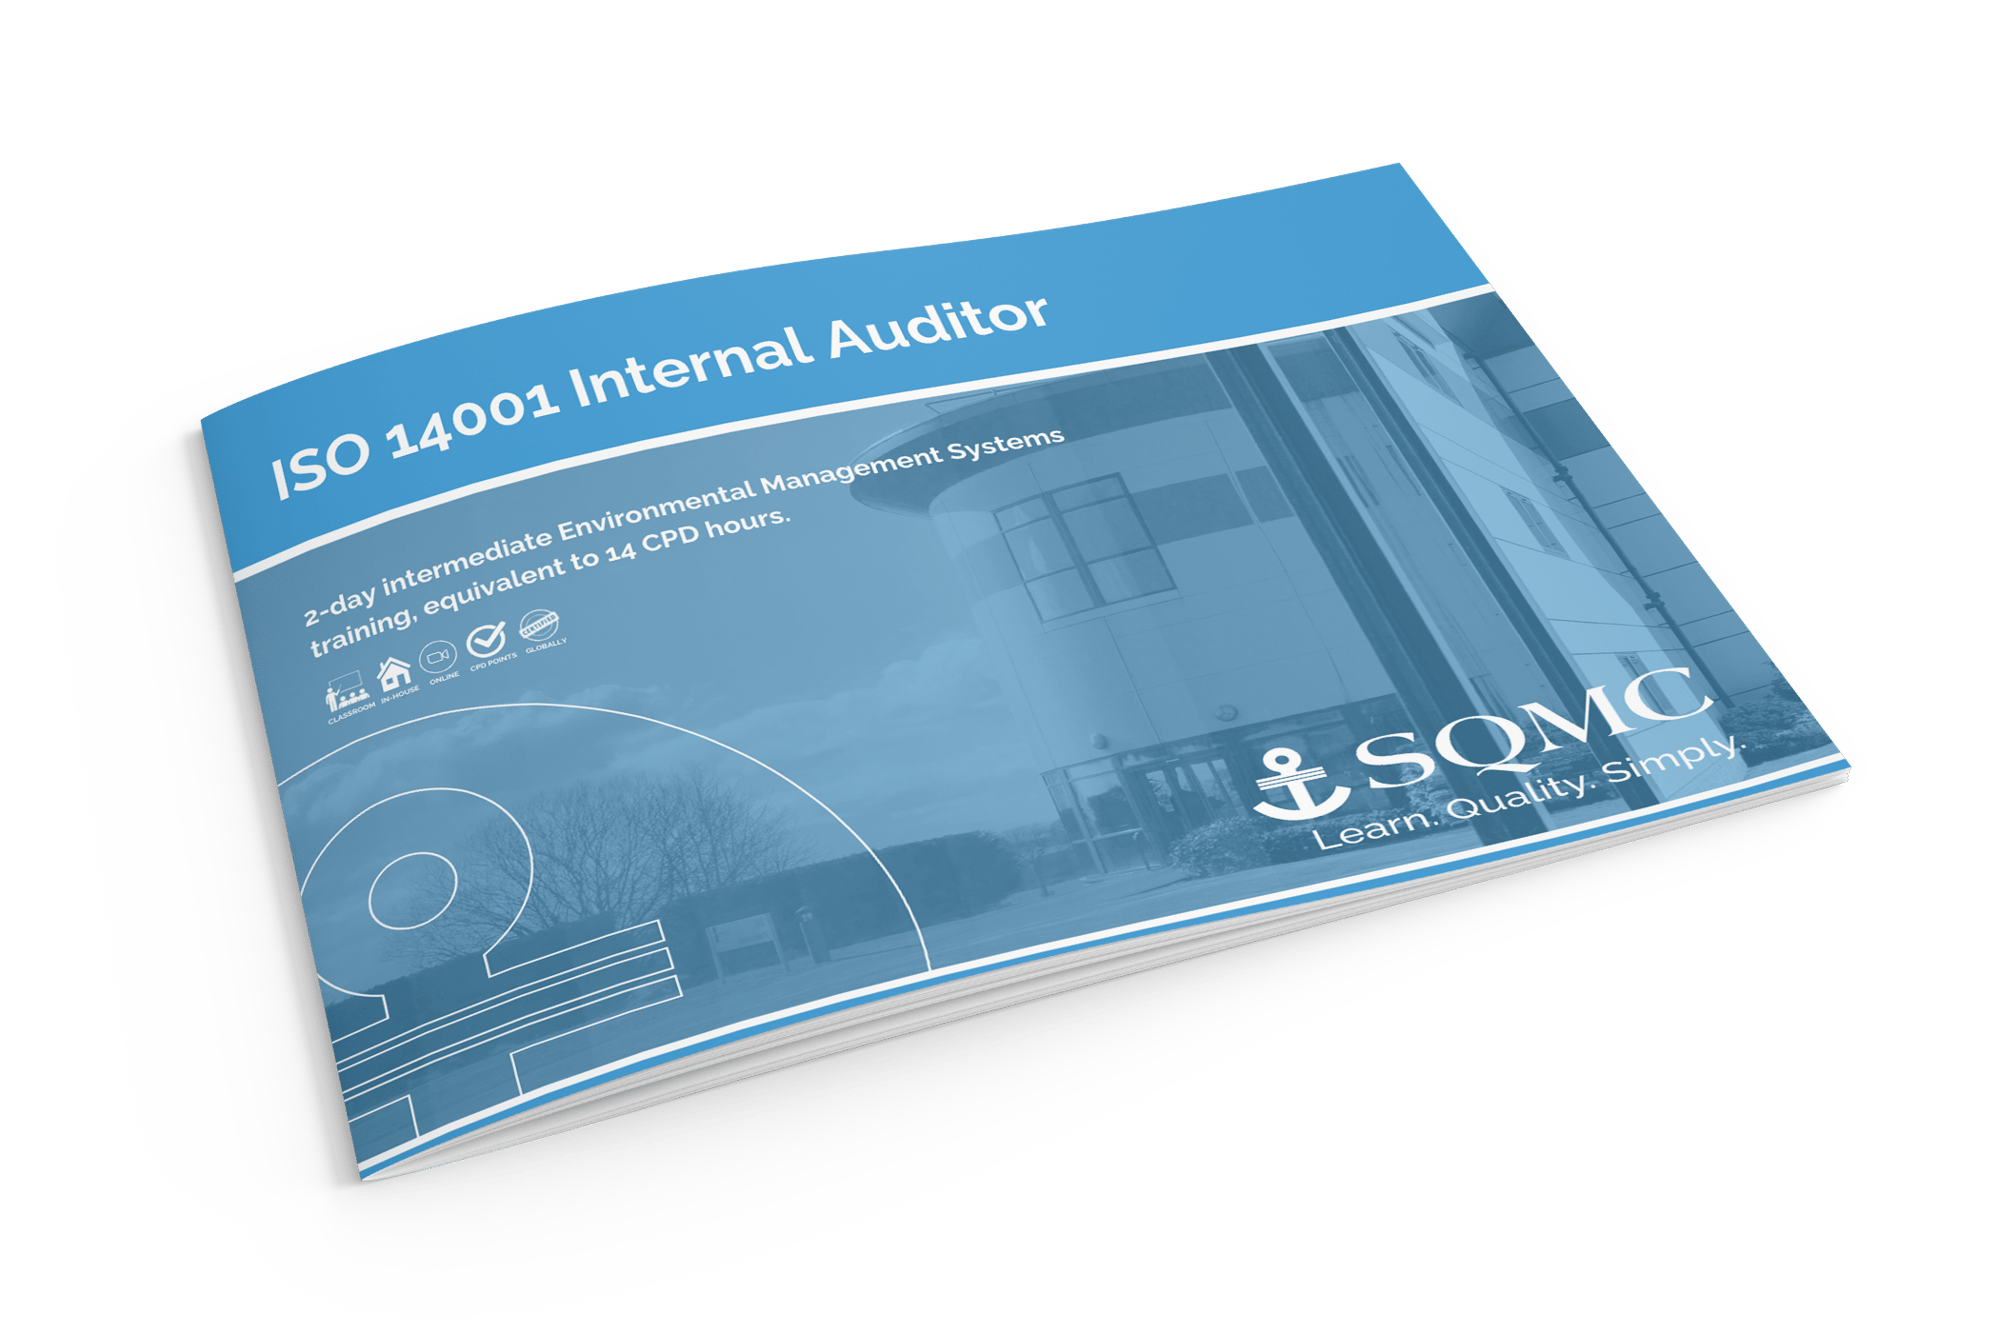 iso-14001-internal-auditor-syllabus